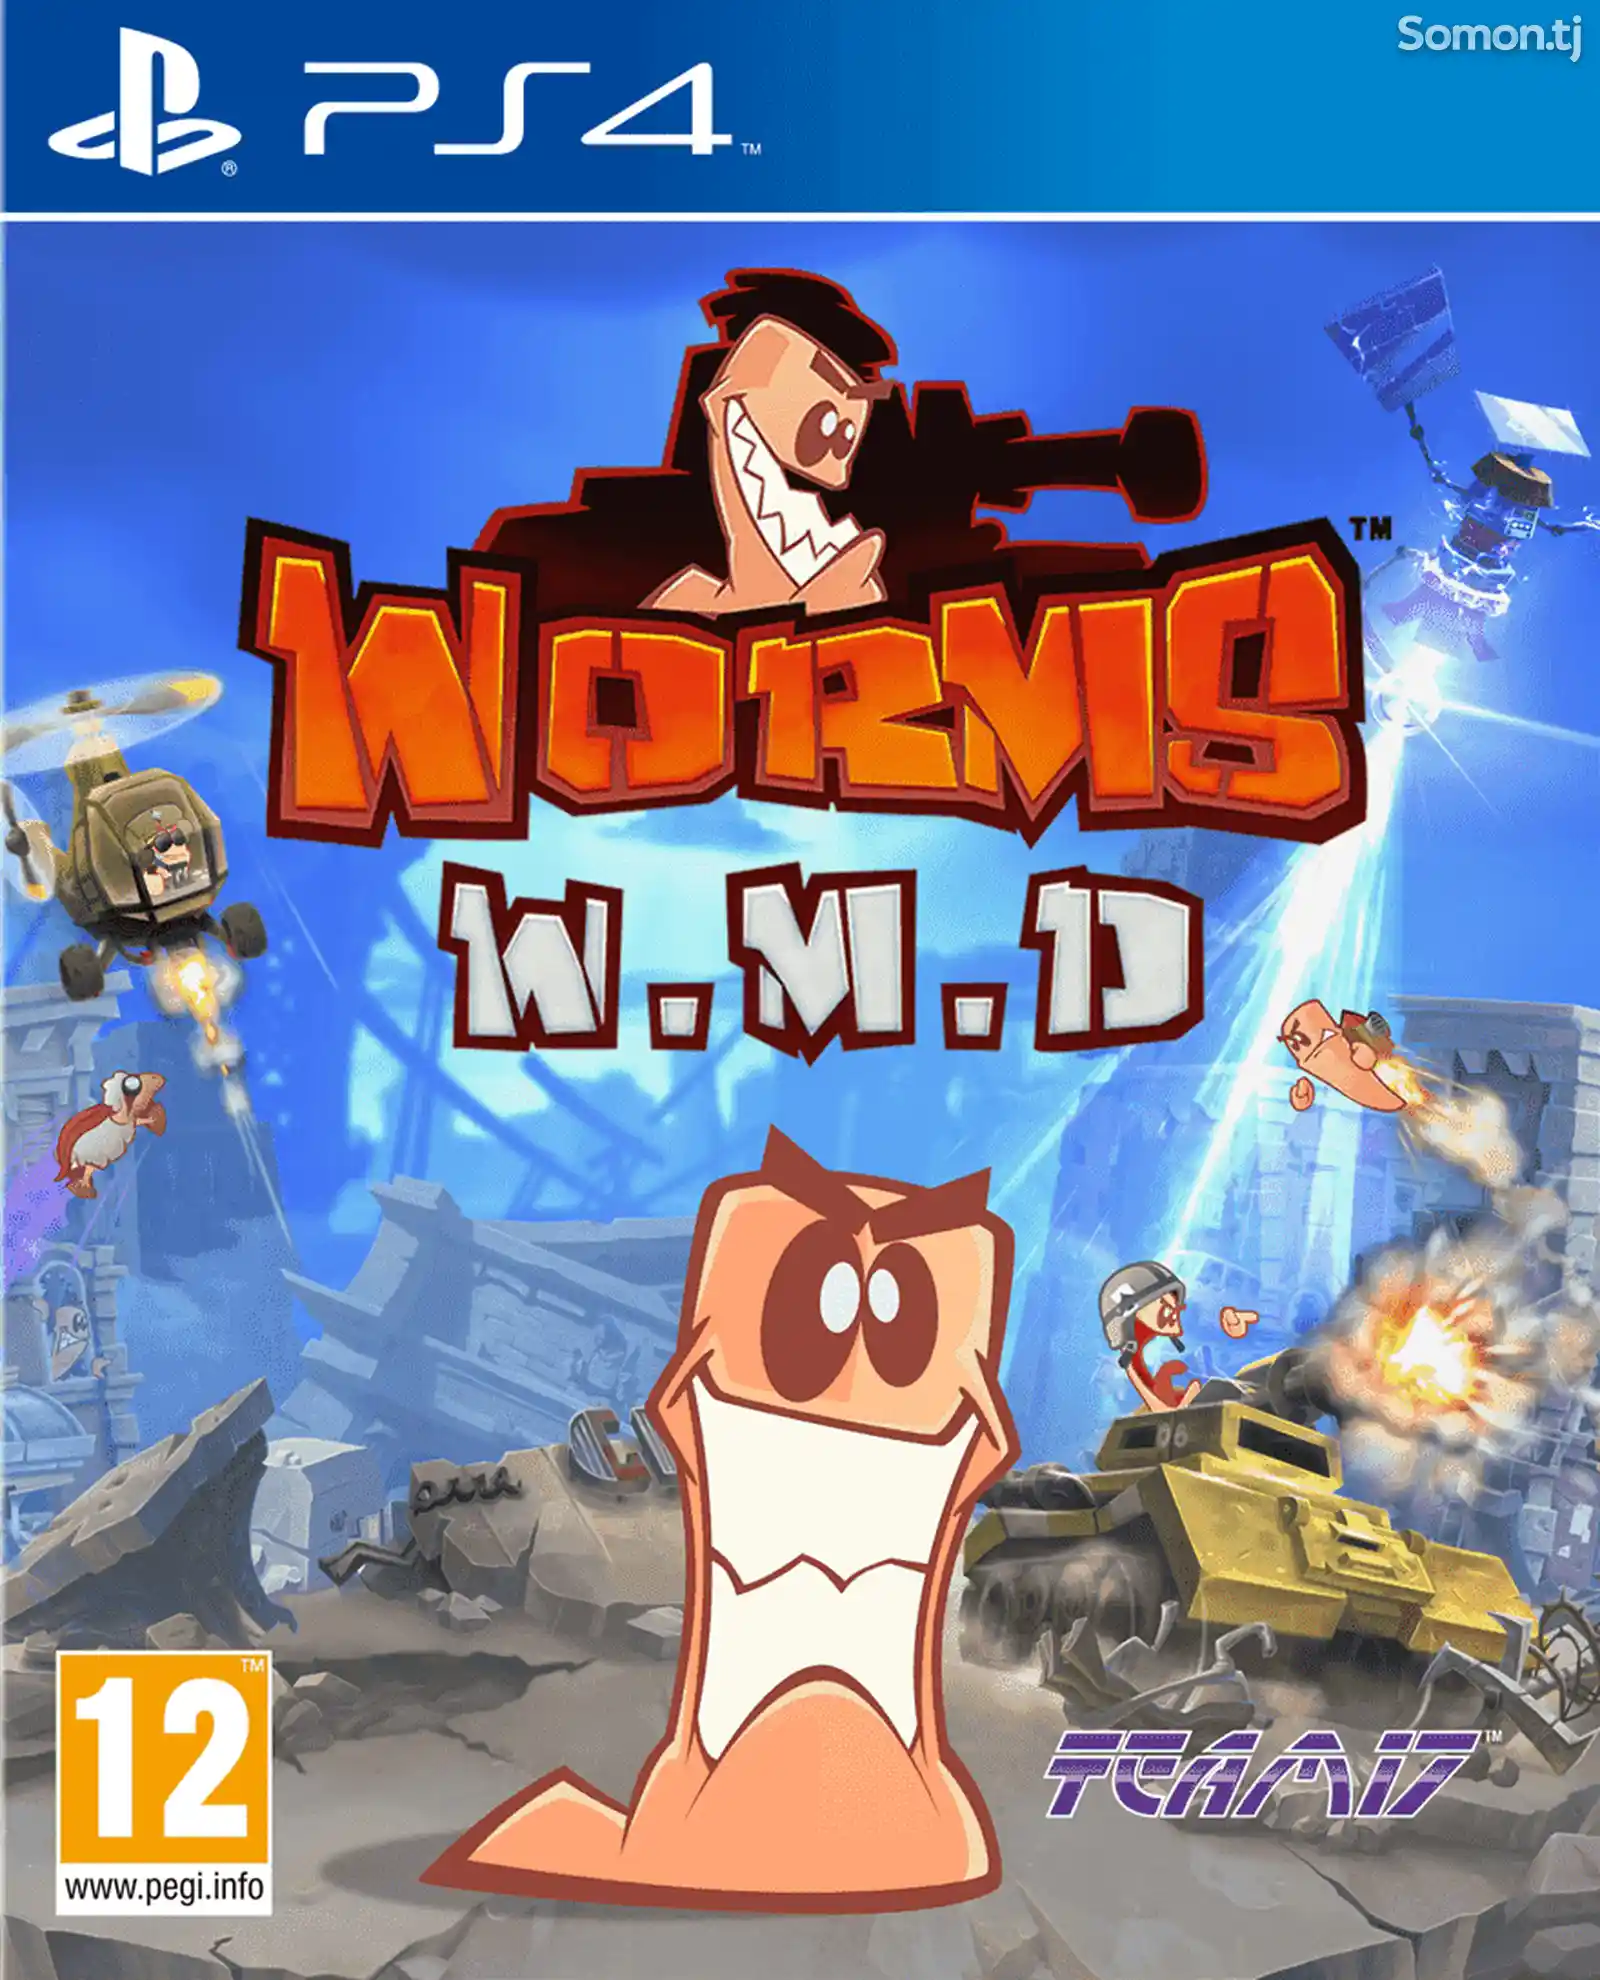 Игра Worms wmd для PS-4 / 5.05 / 6.72 / 7.02 / 7.55 / 9.00 /-1